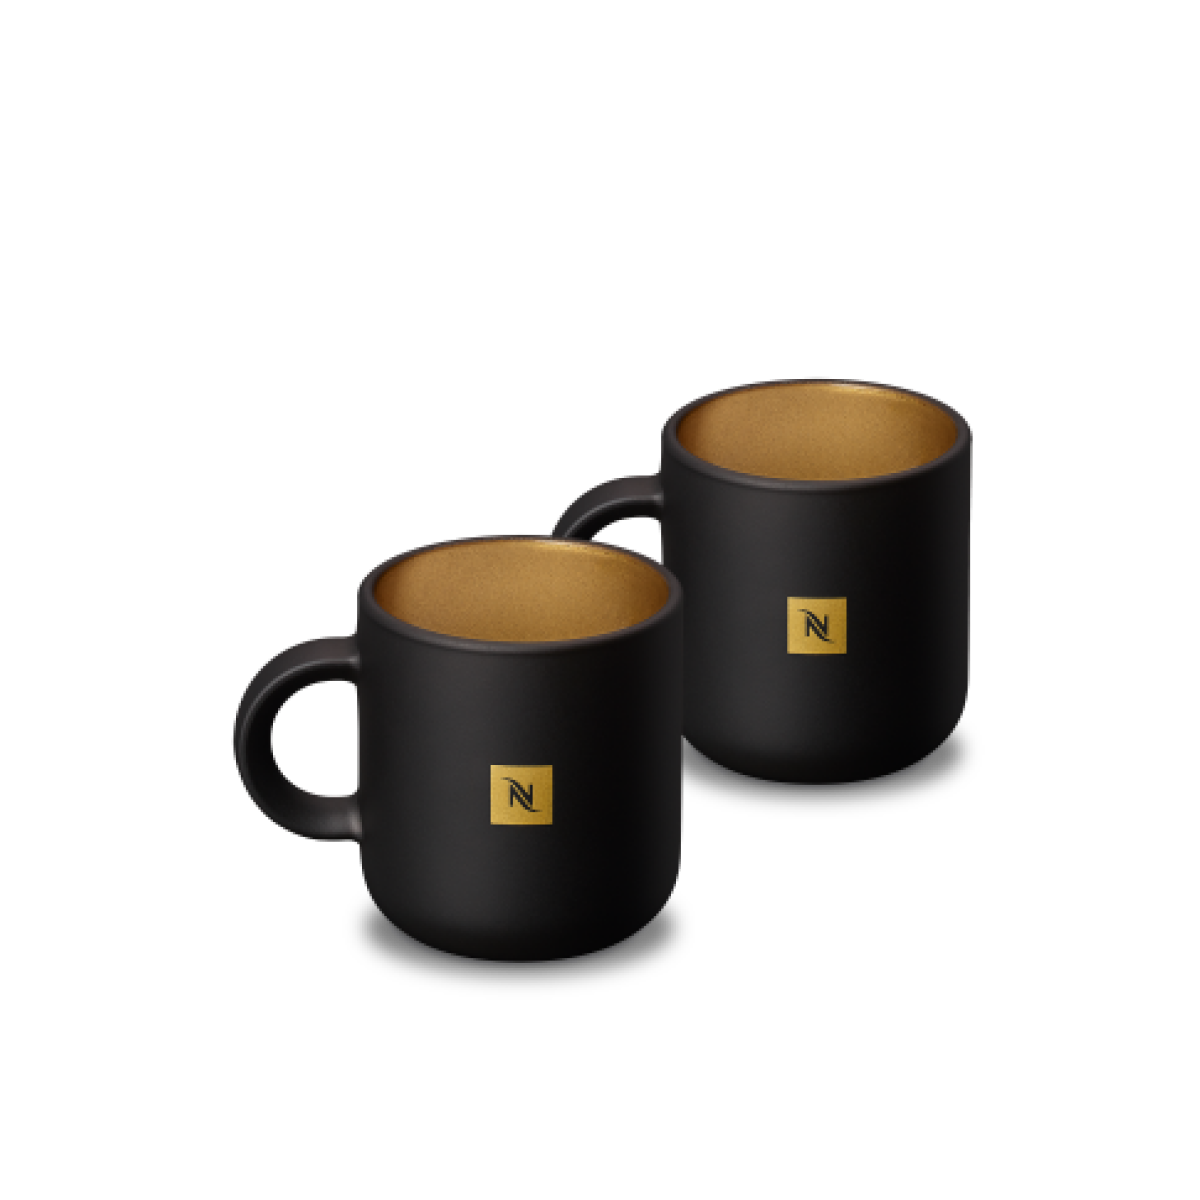 Nespresso x Chiara Ferragni Nomad Travel Mug & Coffee Cup Set NEW